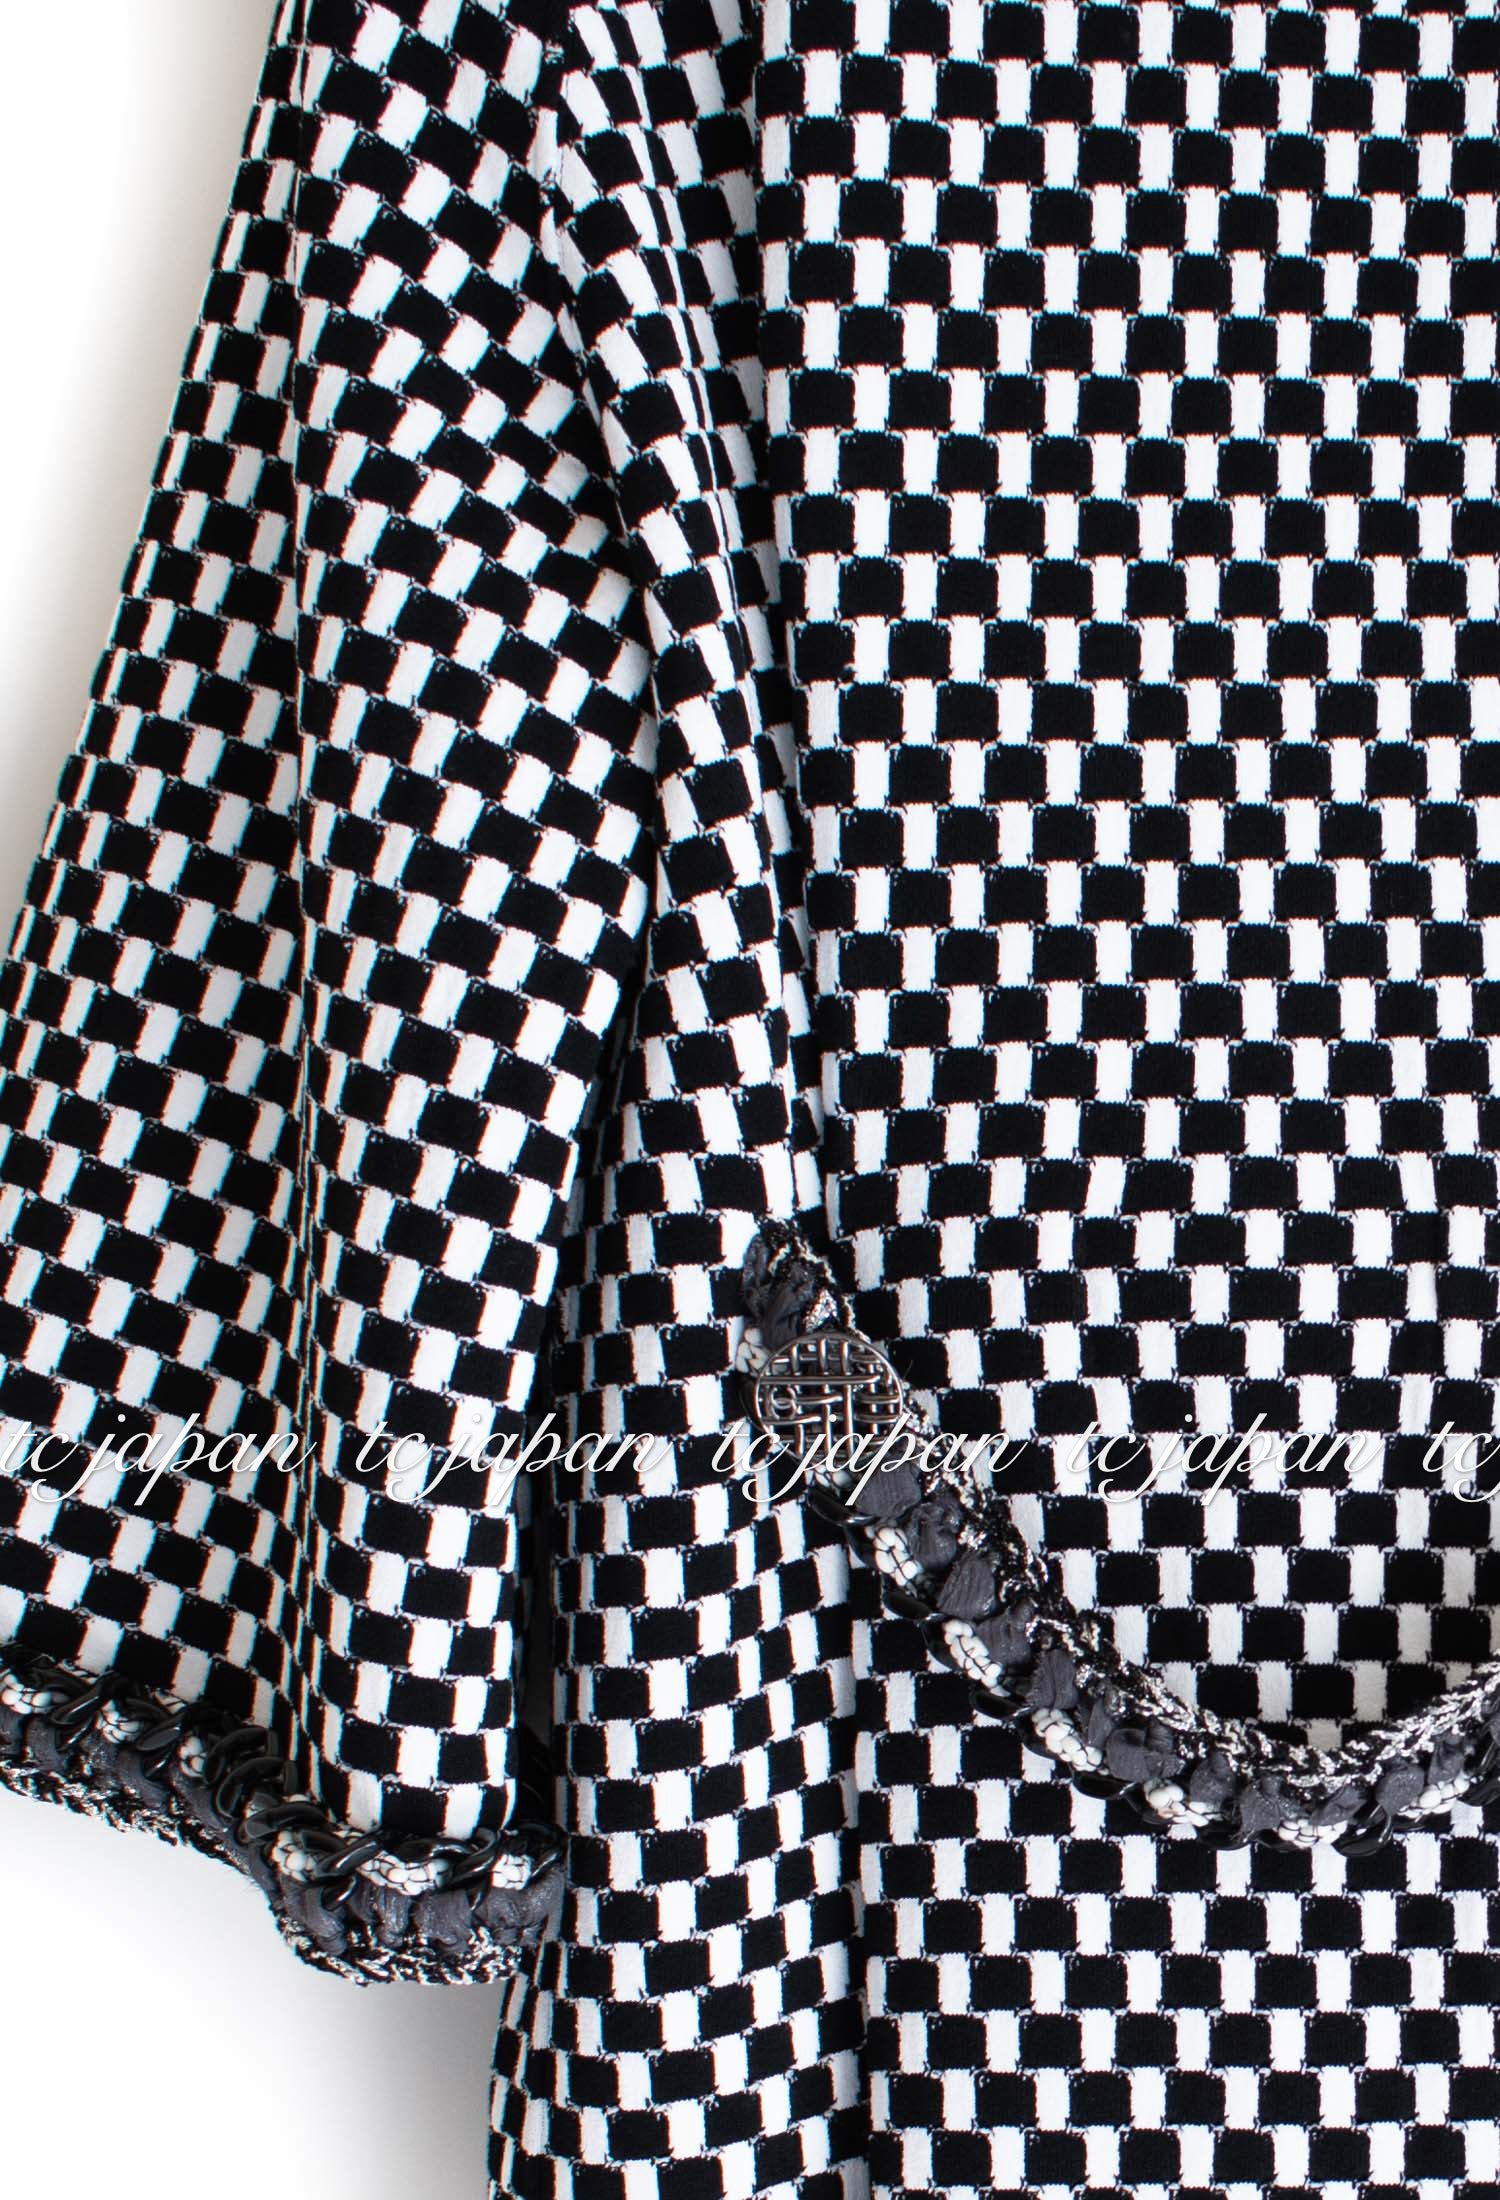 CHANEL 14S Black White Chain trimming Knit  Coat Cardigan 38 40 シャネル チェーントリム・チェック柄 ホワイト・ブラック・ニット・コート 即発